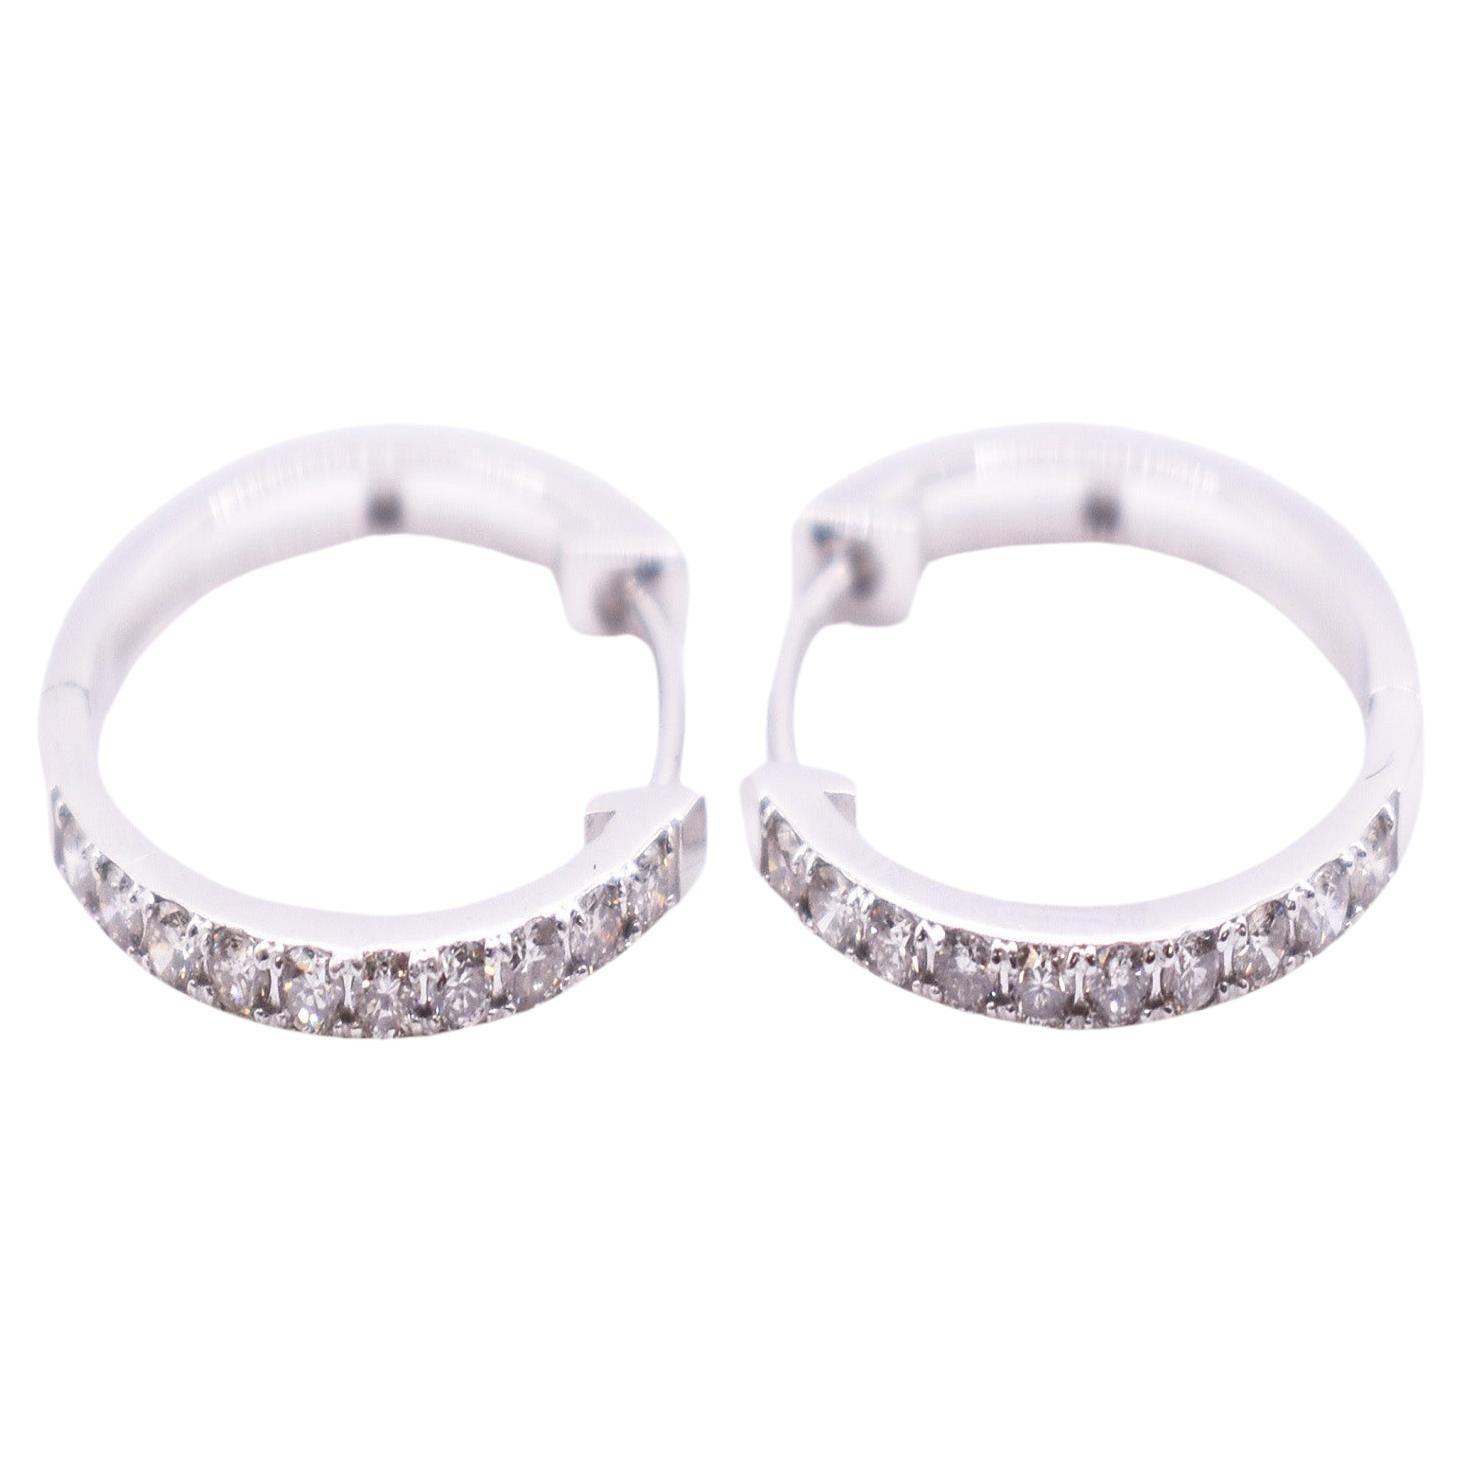 Pair of 18k White Gold Diamond Hoop Earrings